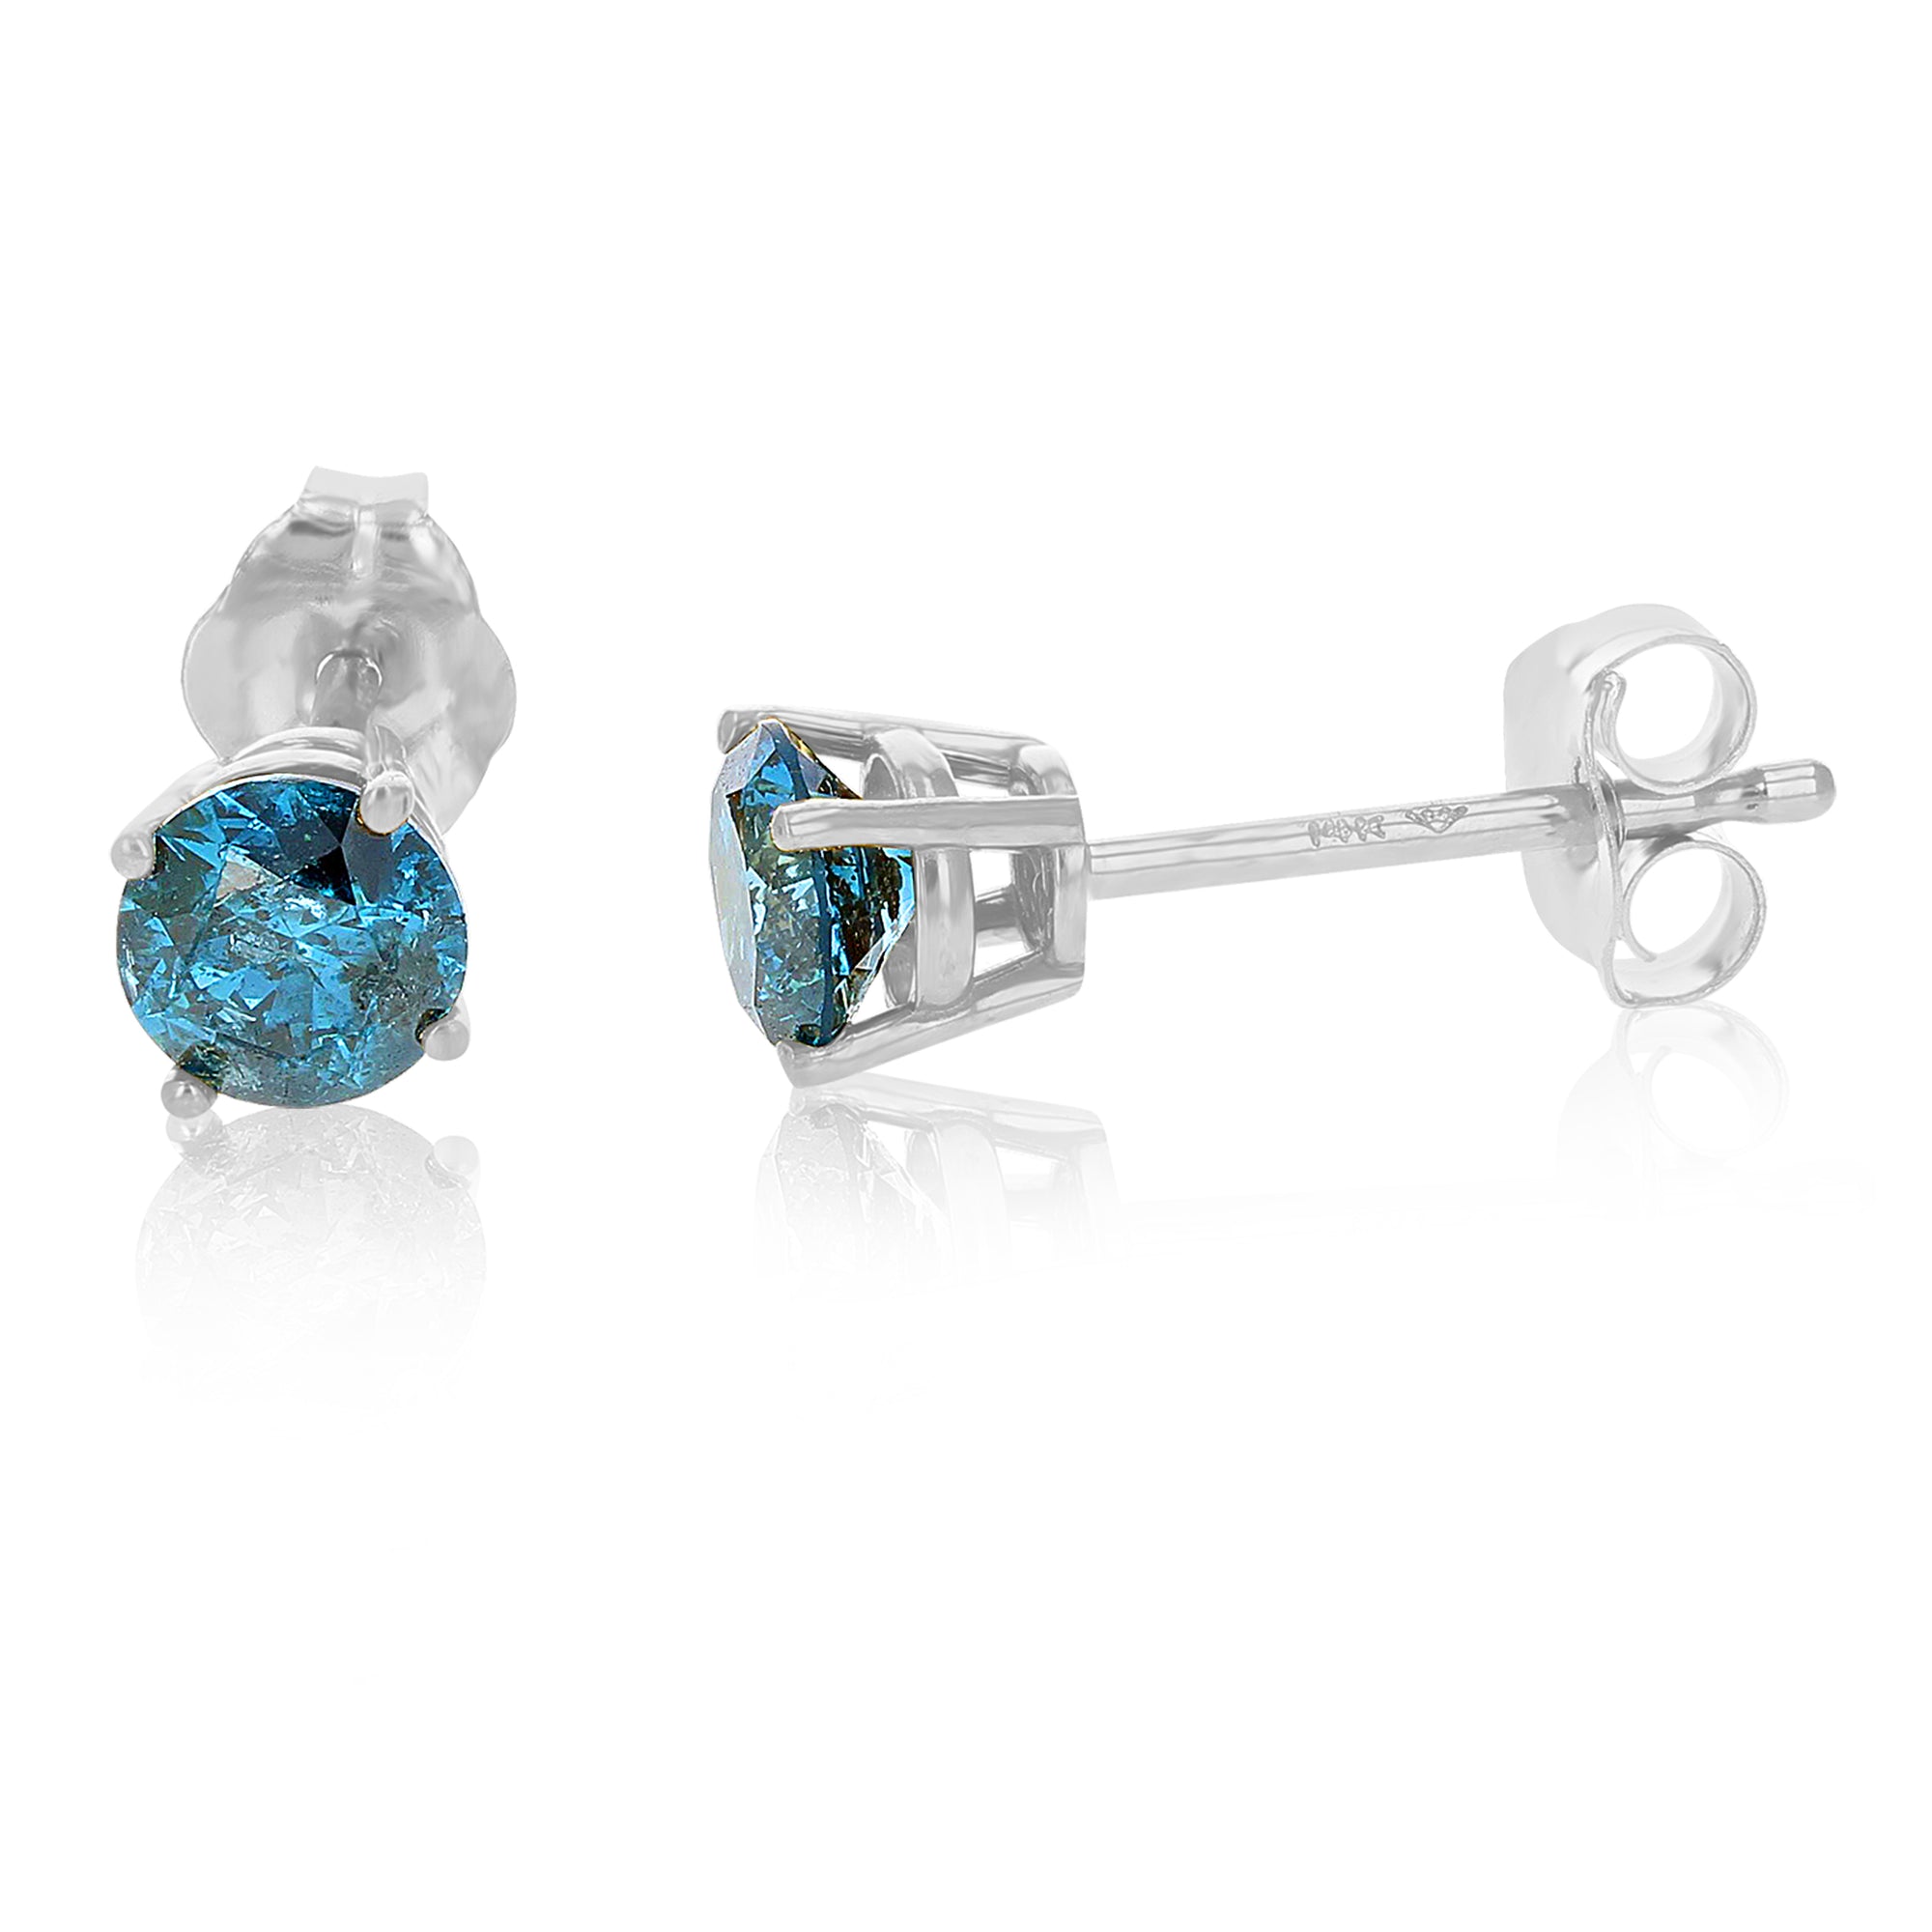 1 cttw Blue Diamond Stud Earrings 14K White Gold Round Shape with Push Backs Prong Set